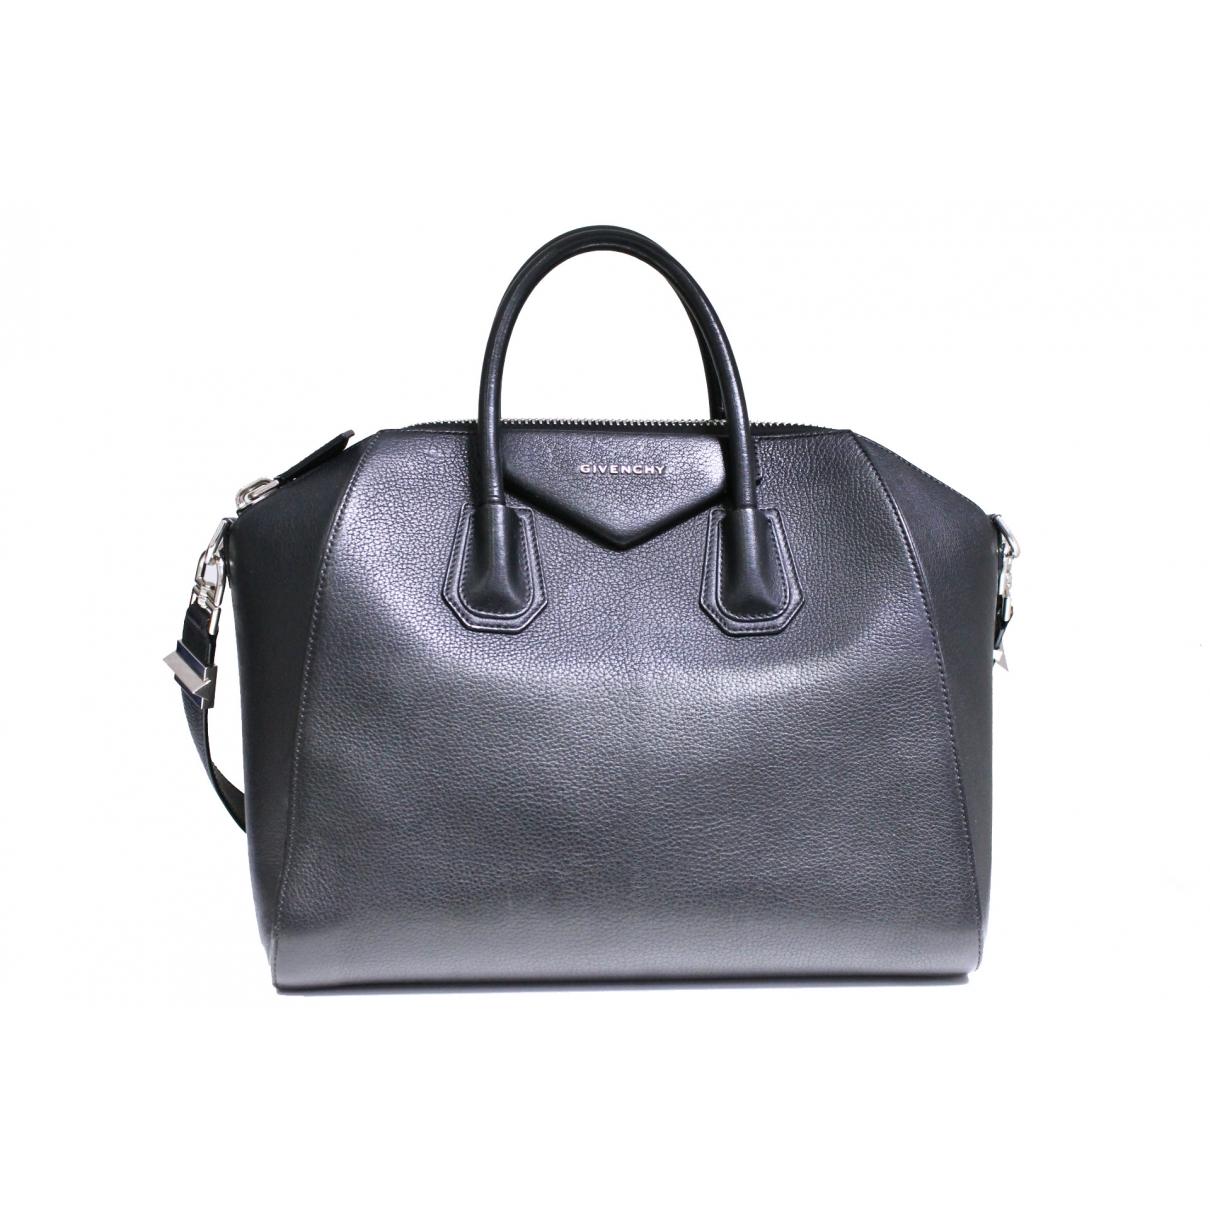 Lyst - Givenchy Antigona Leather Handbag in Black